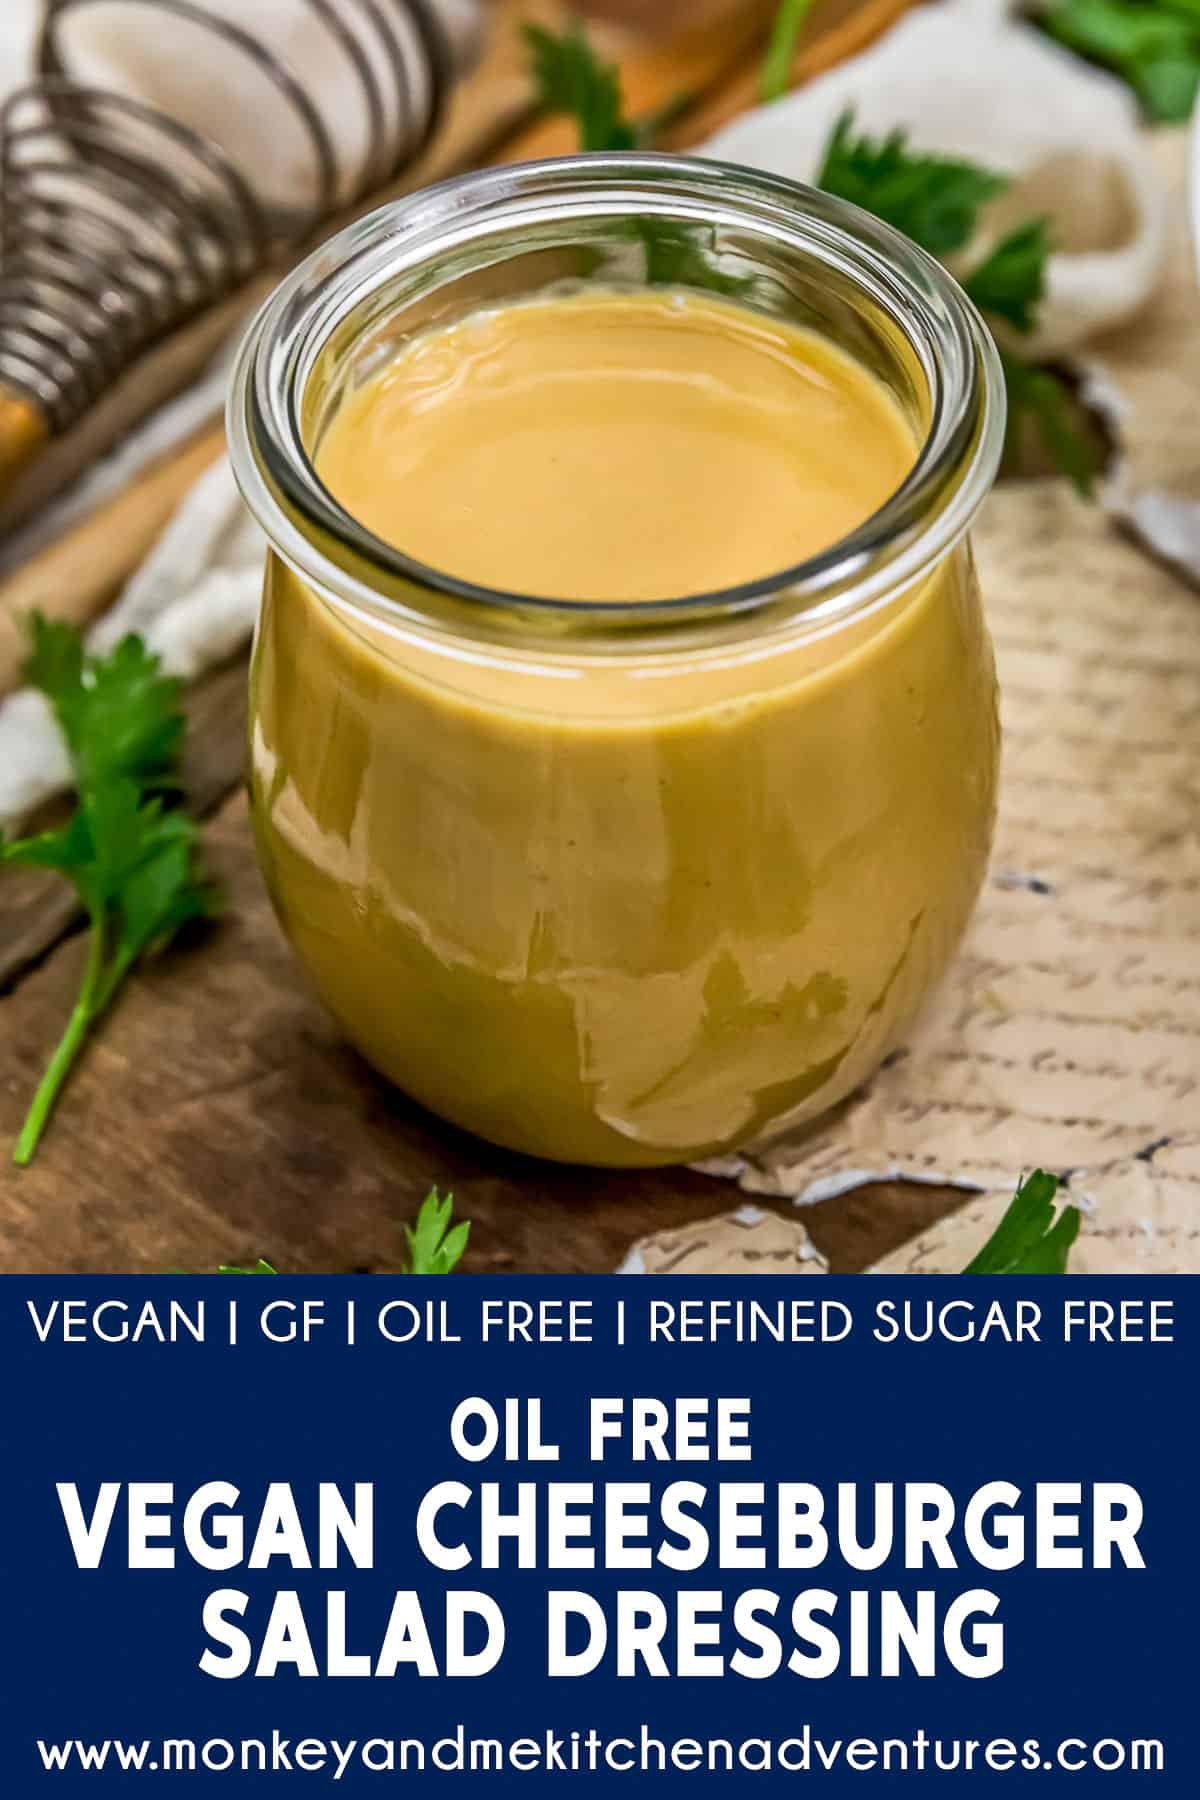 Oil Free Vegan Cheeseburger Salad Dressing with Text Description